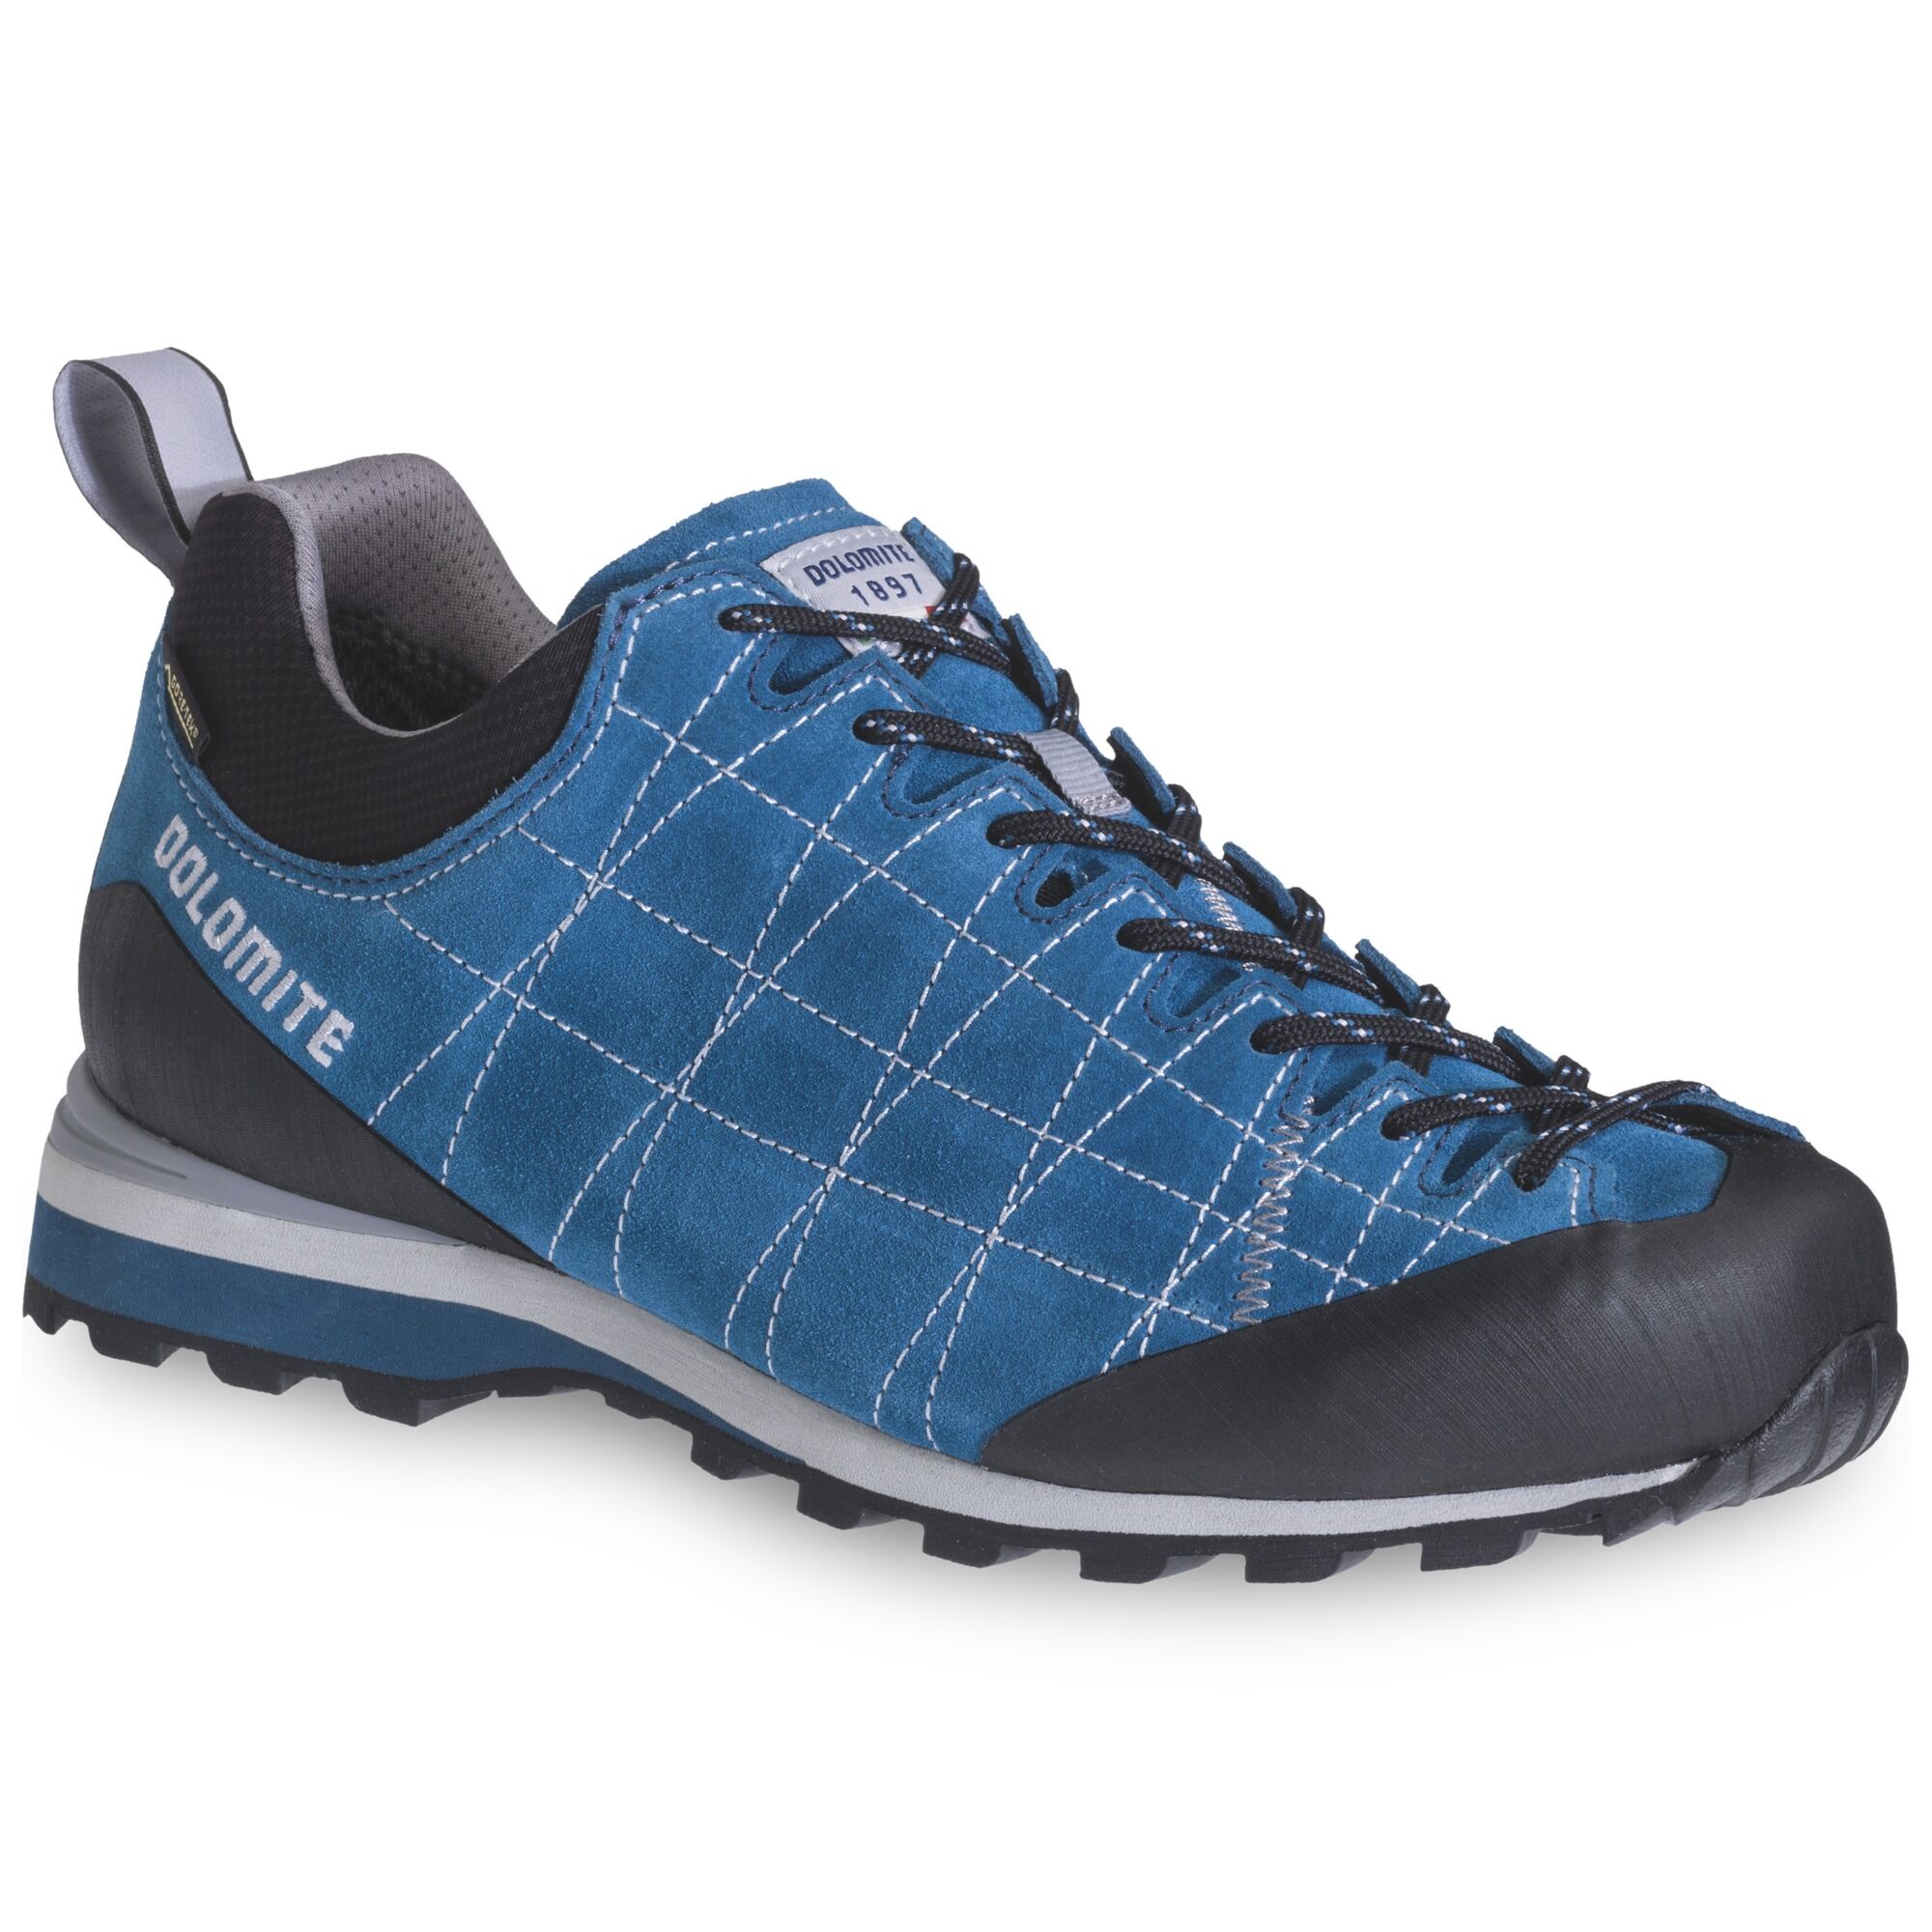 Dolomite Diagonal GTX - Walking shoes - Men's